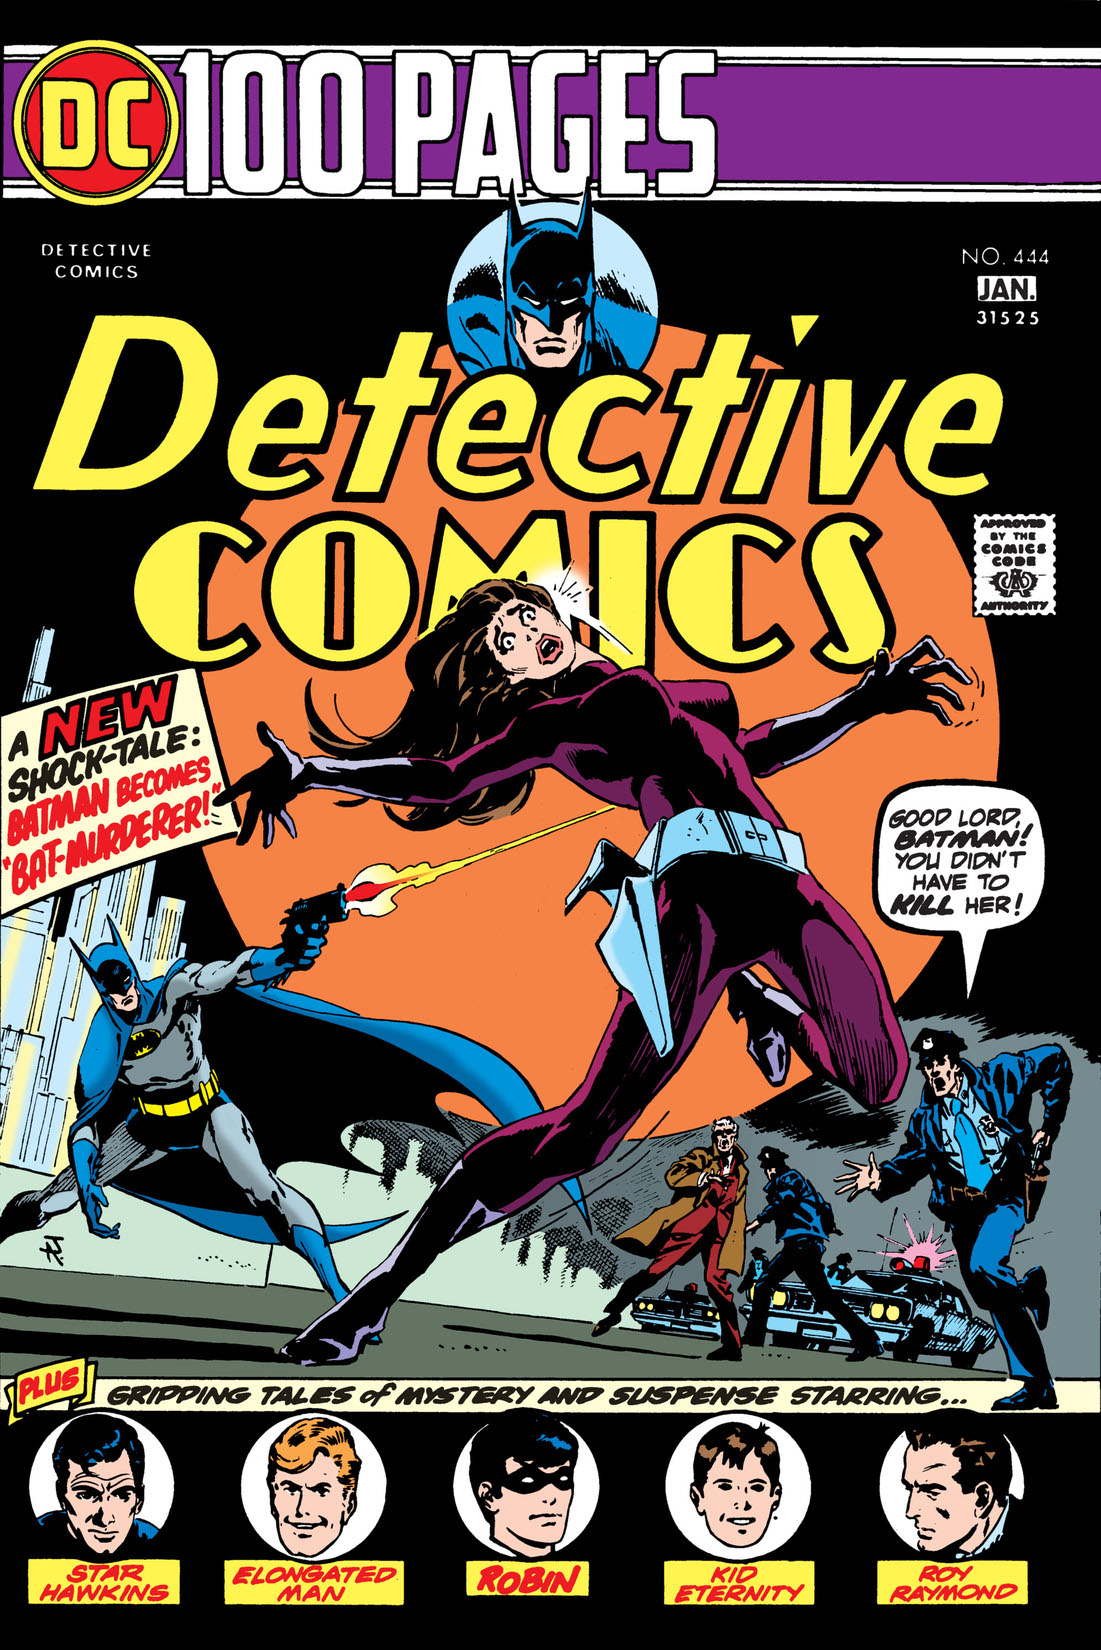 Detective Comics (1937-) #444 preview images